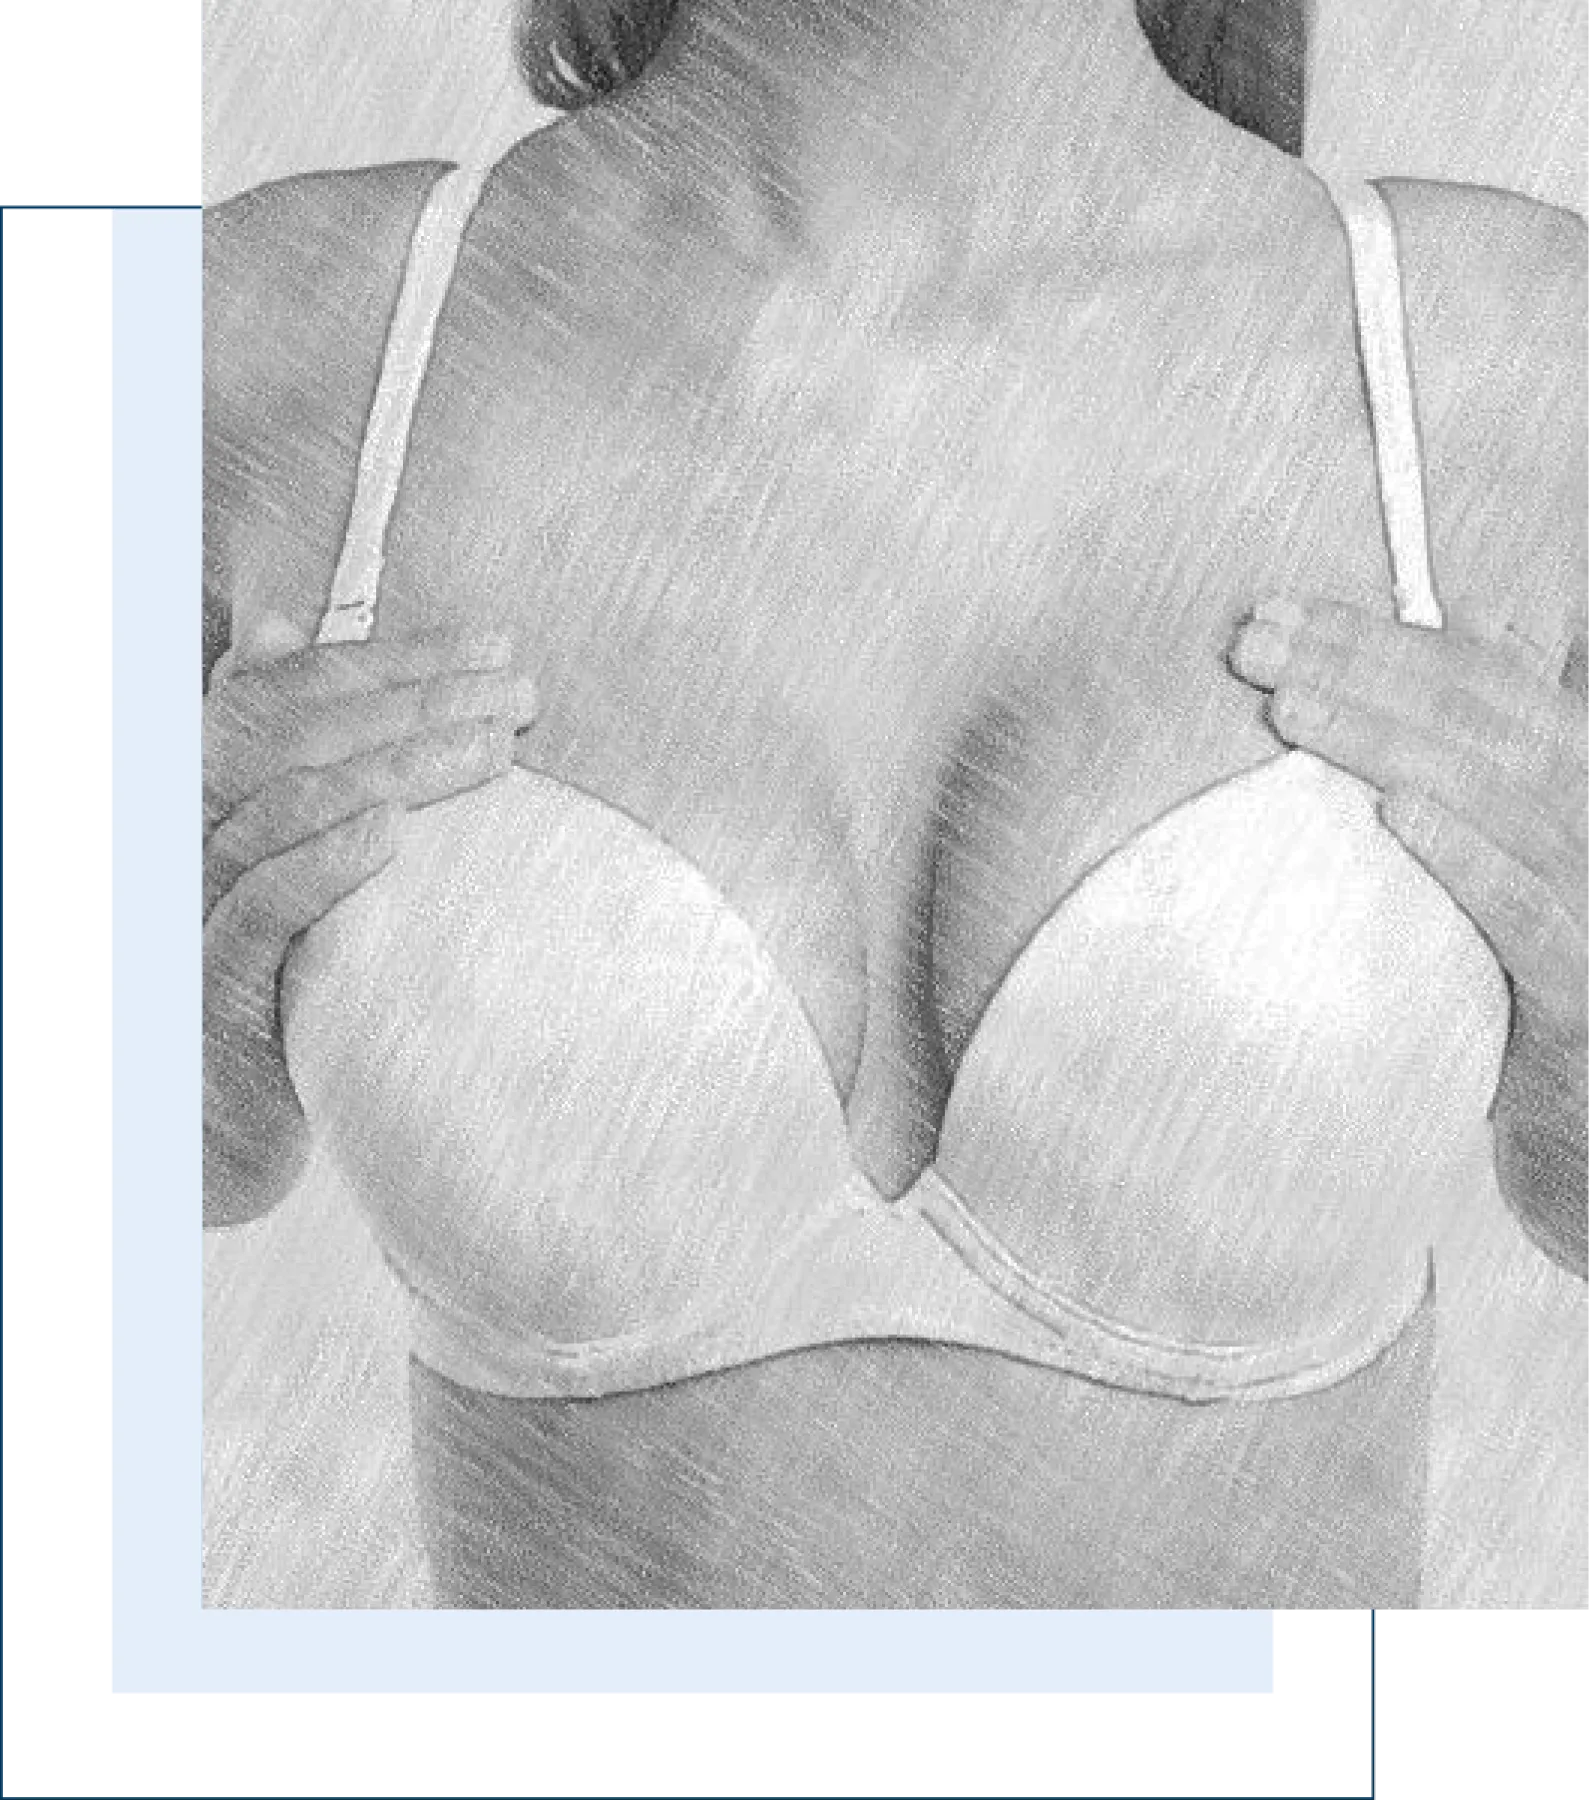 Breast lift Surgery